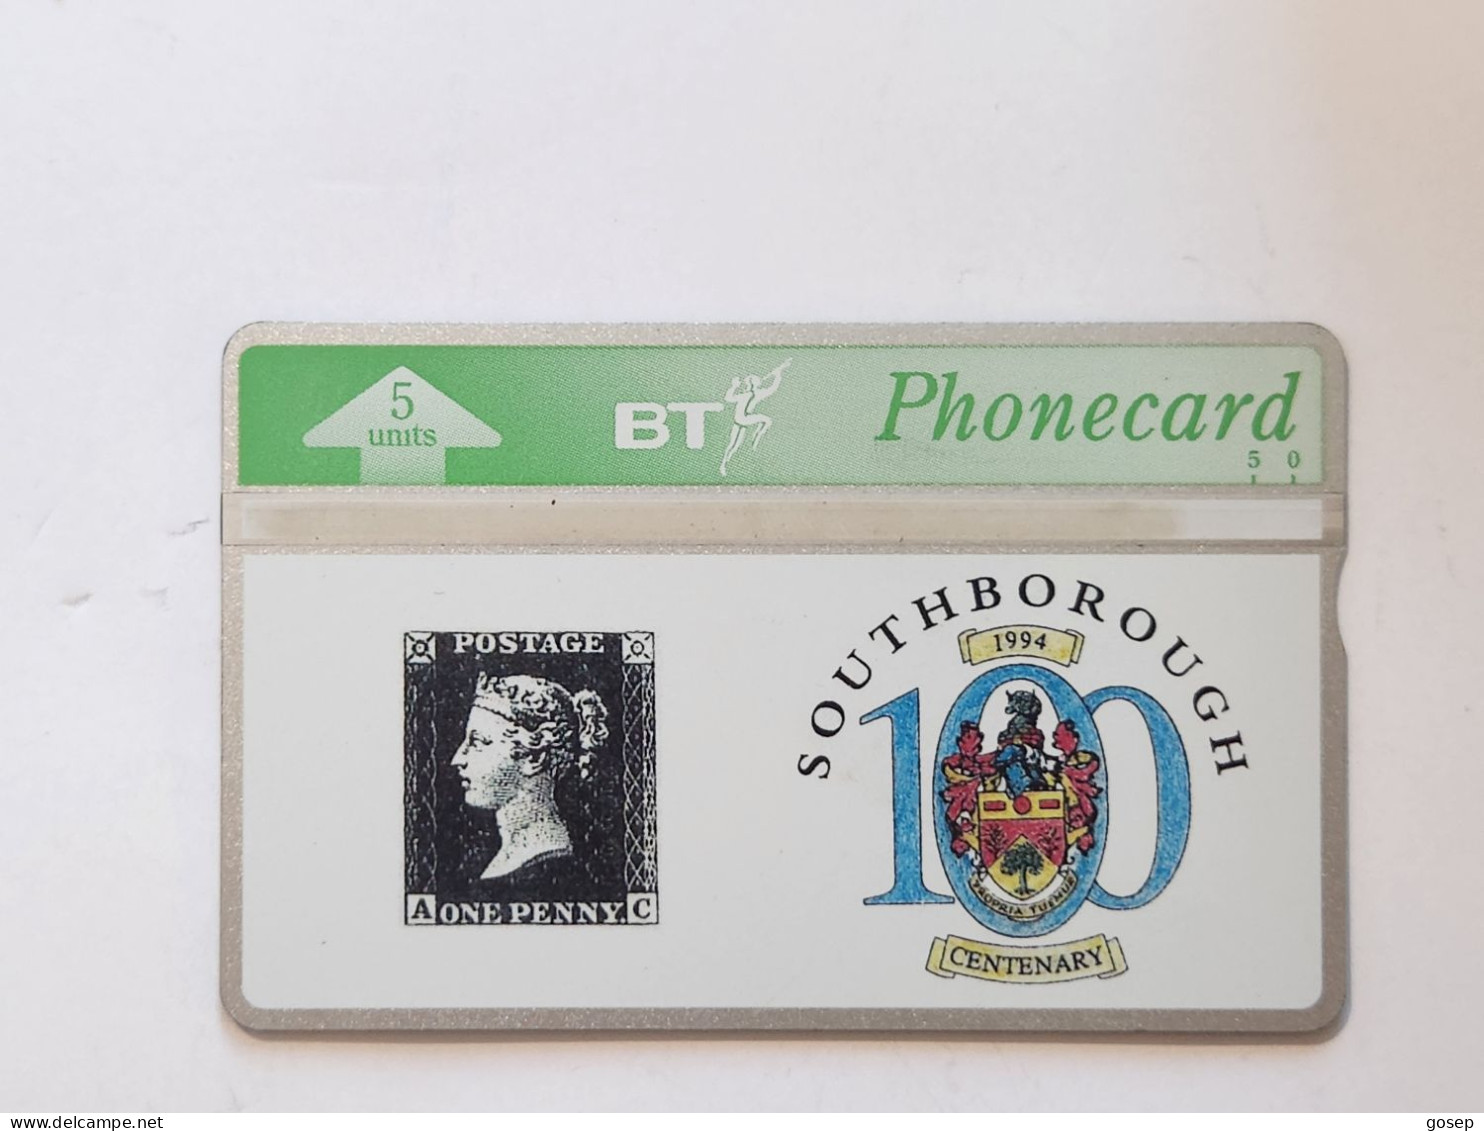 United Kingdom-(BTG-338)-Southborough Centenary-(312)(5units)(407A36978)(tirage-1.000)-price Cataloge-20.00£-mint - BT Allgemeine